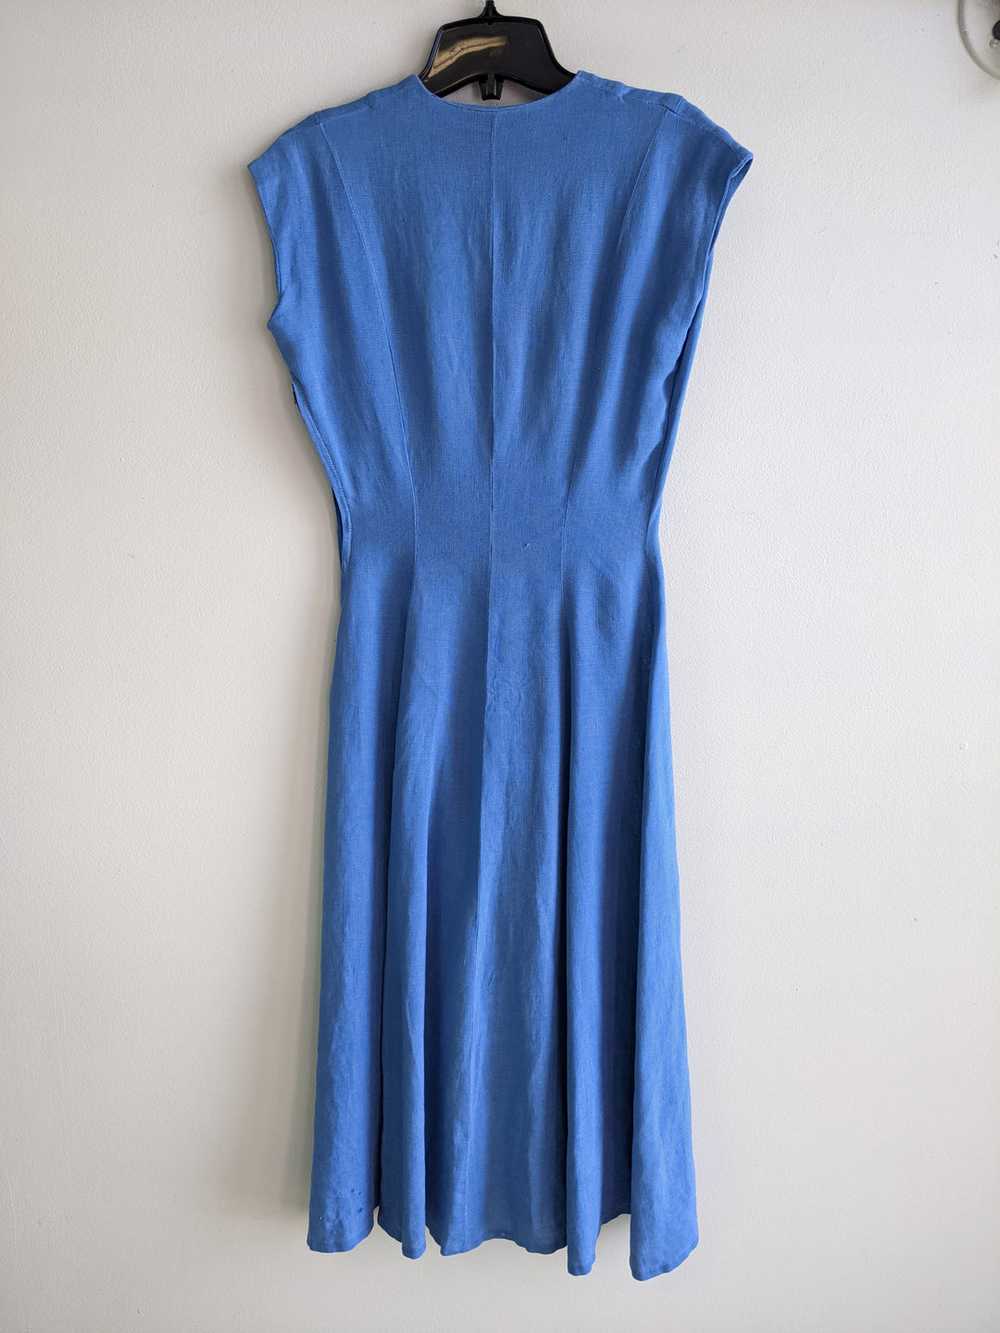 1950s Cornflower Blue Dress - XS - image 3